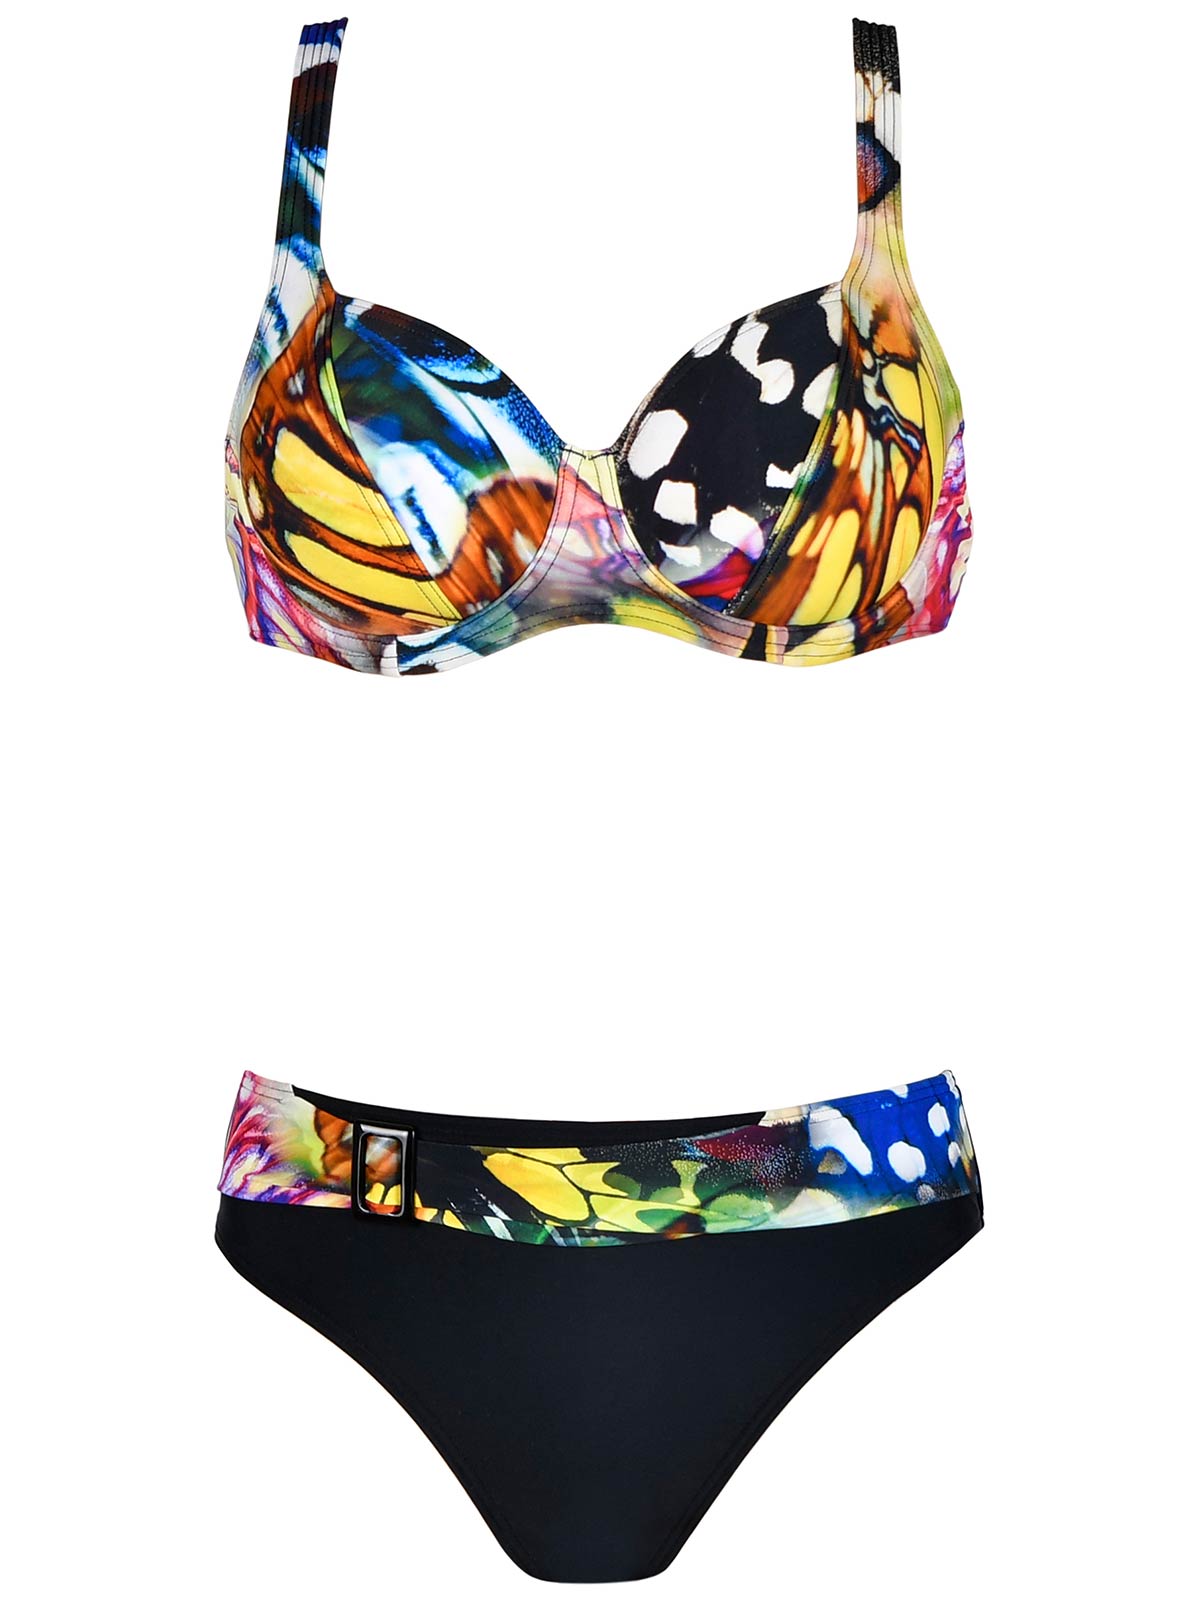 BLACK Printed Wired Bikini Set - Size 10 to 16